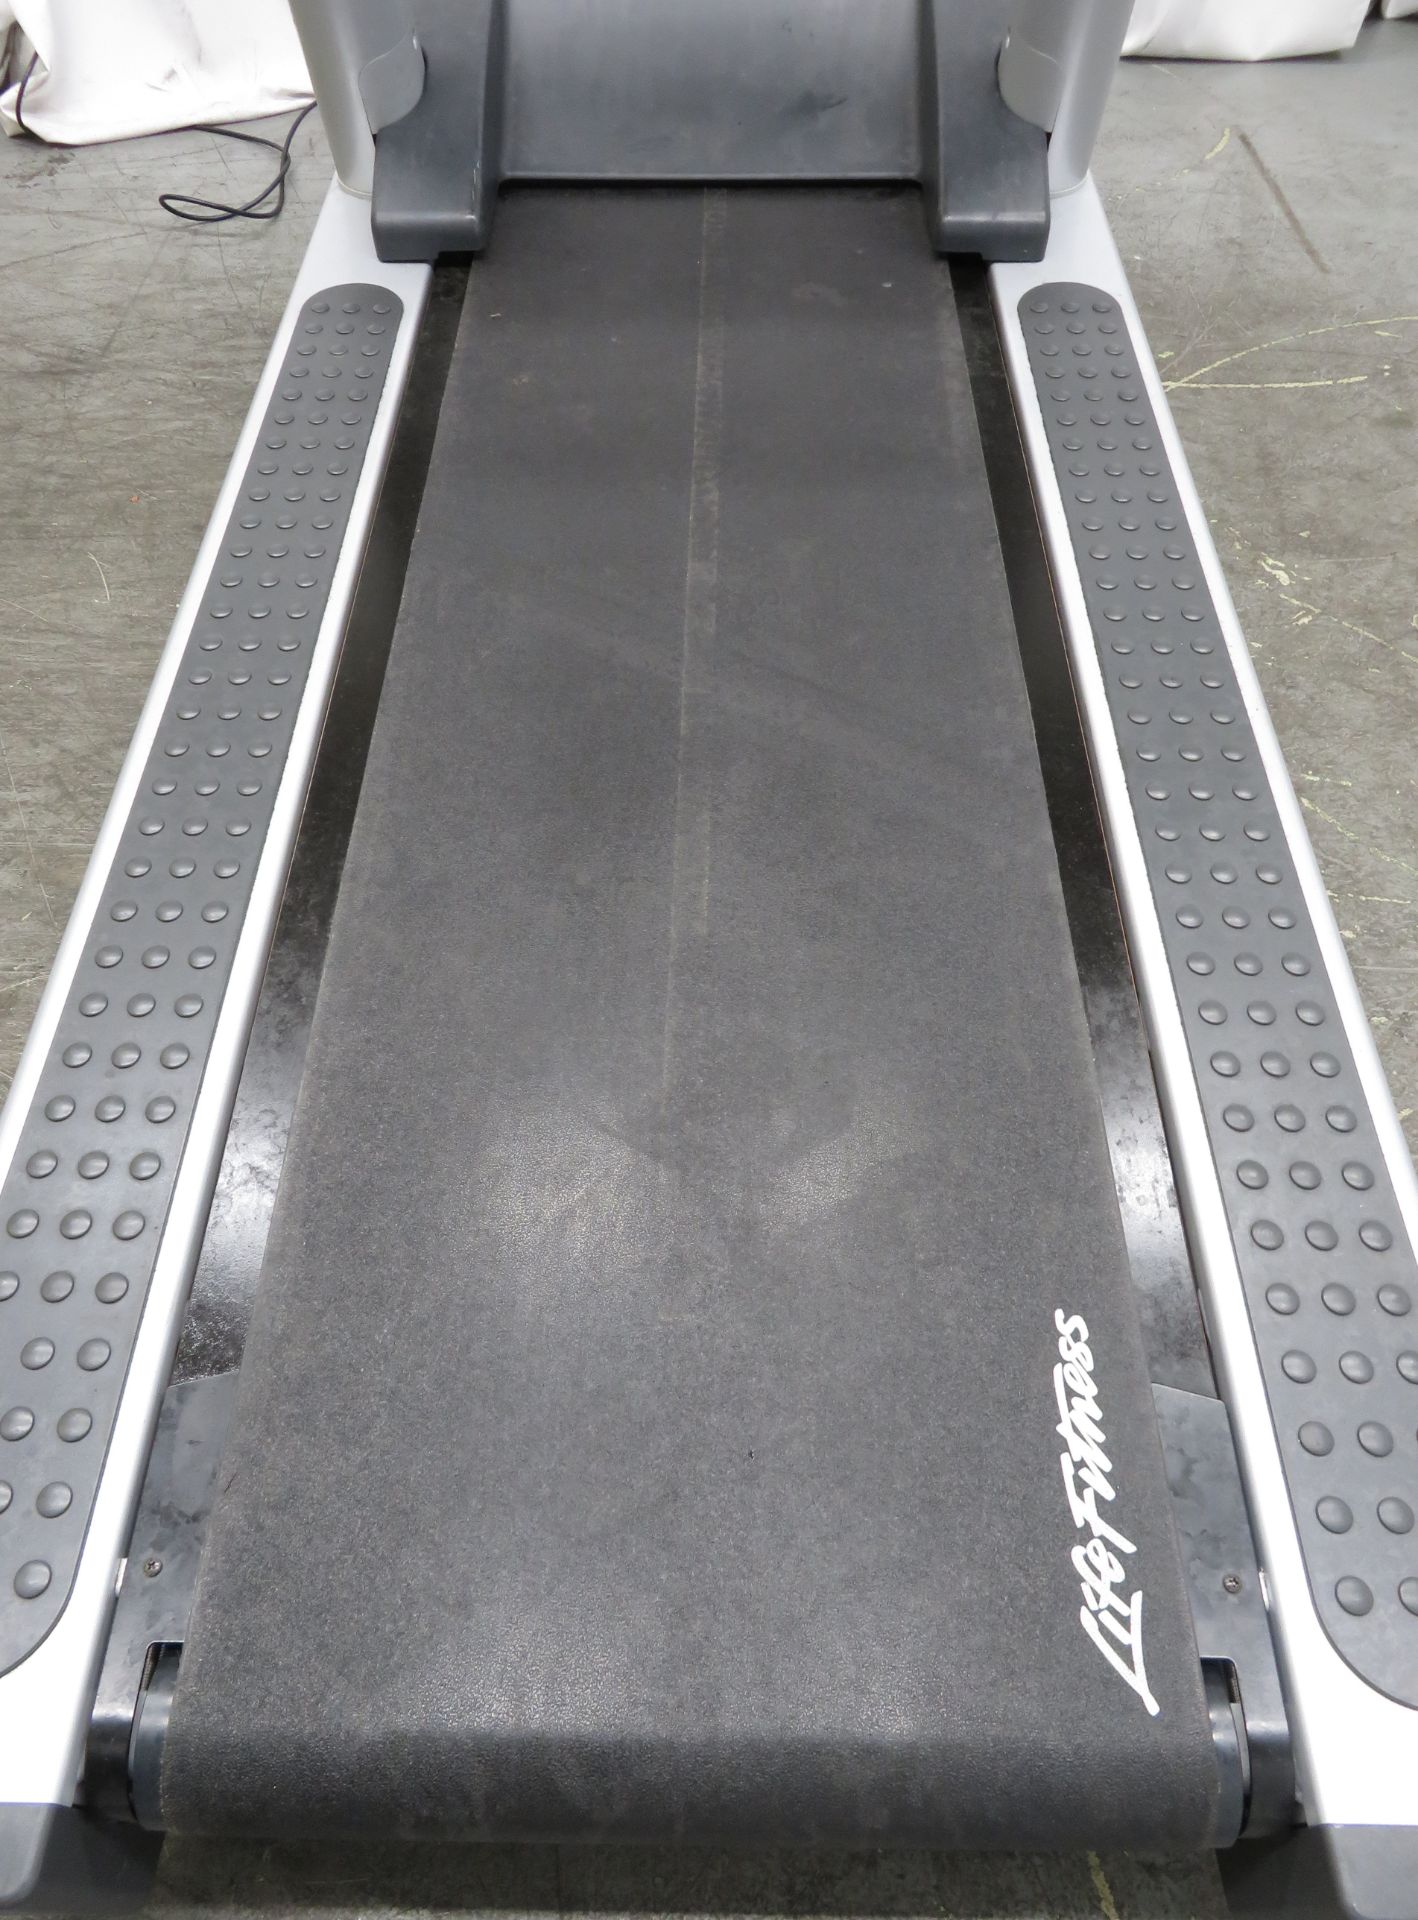 Life Fitness Flex Deck Treadmill. LED Display. - Image 4 of 9